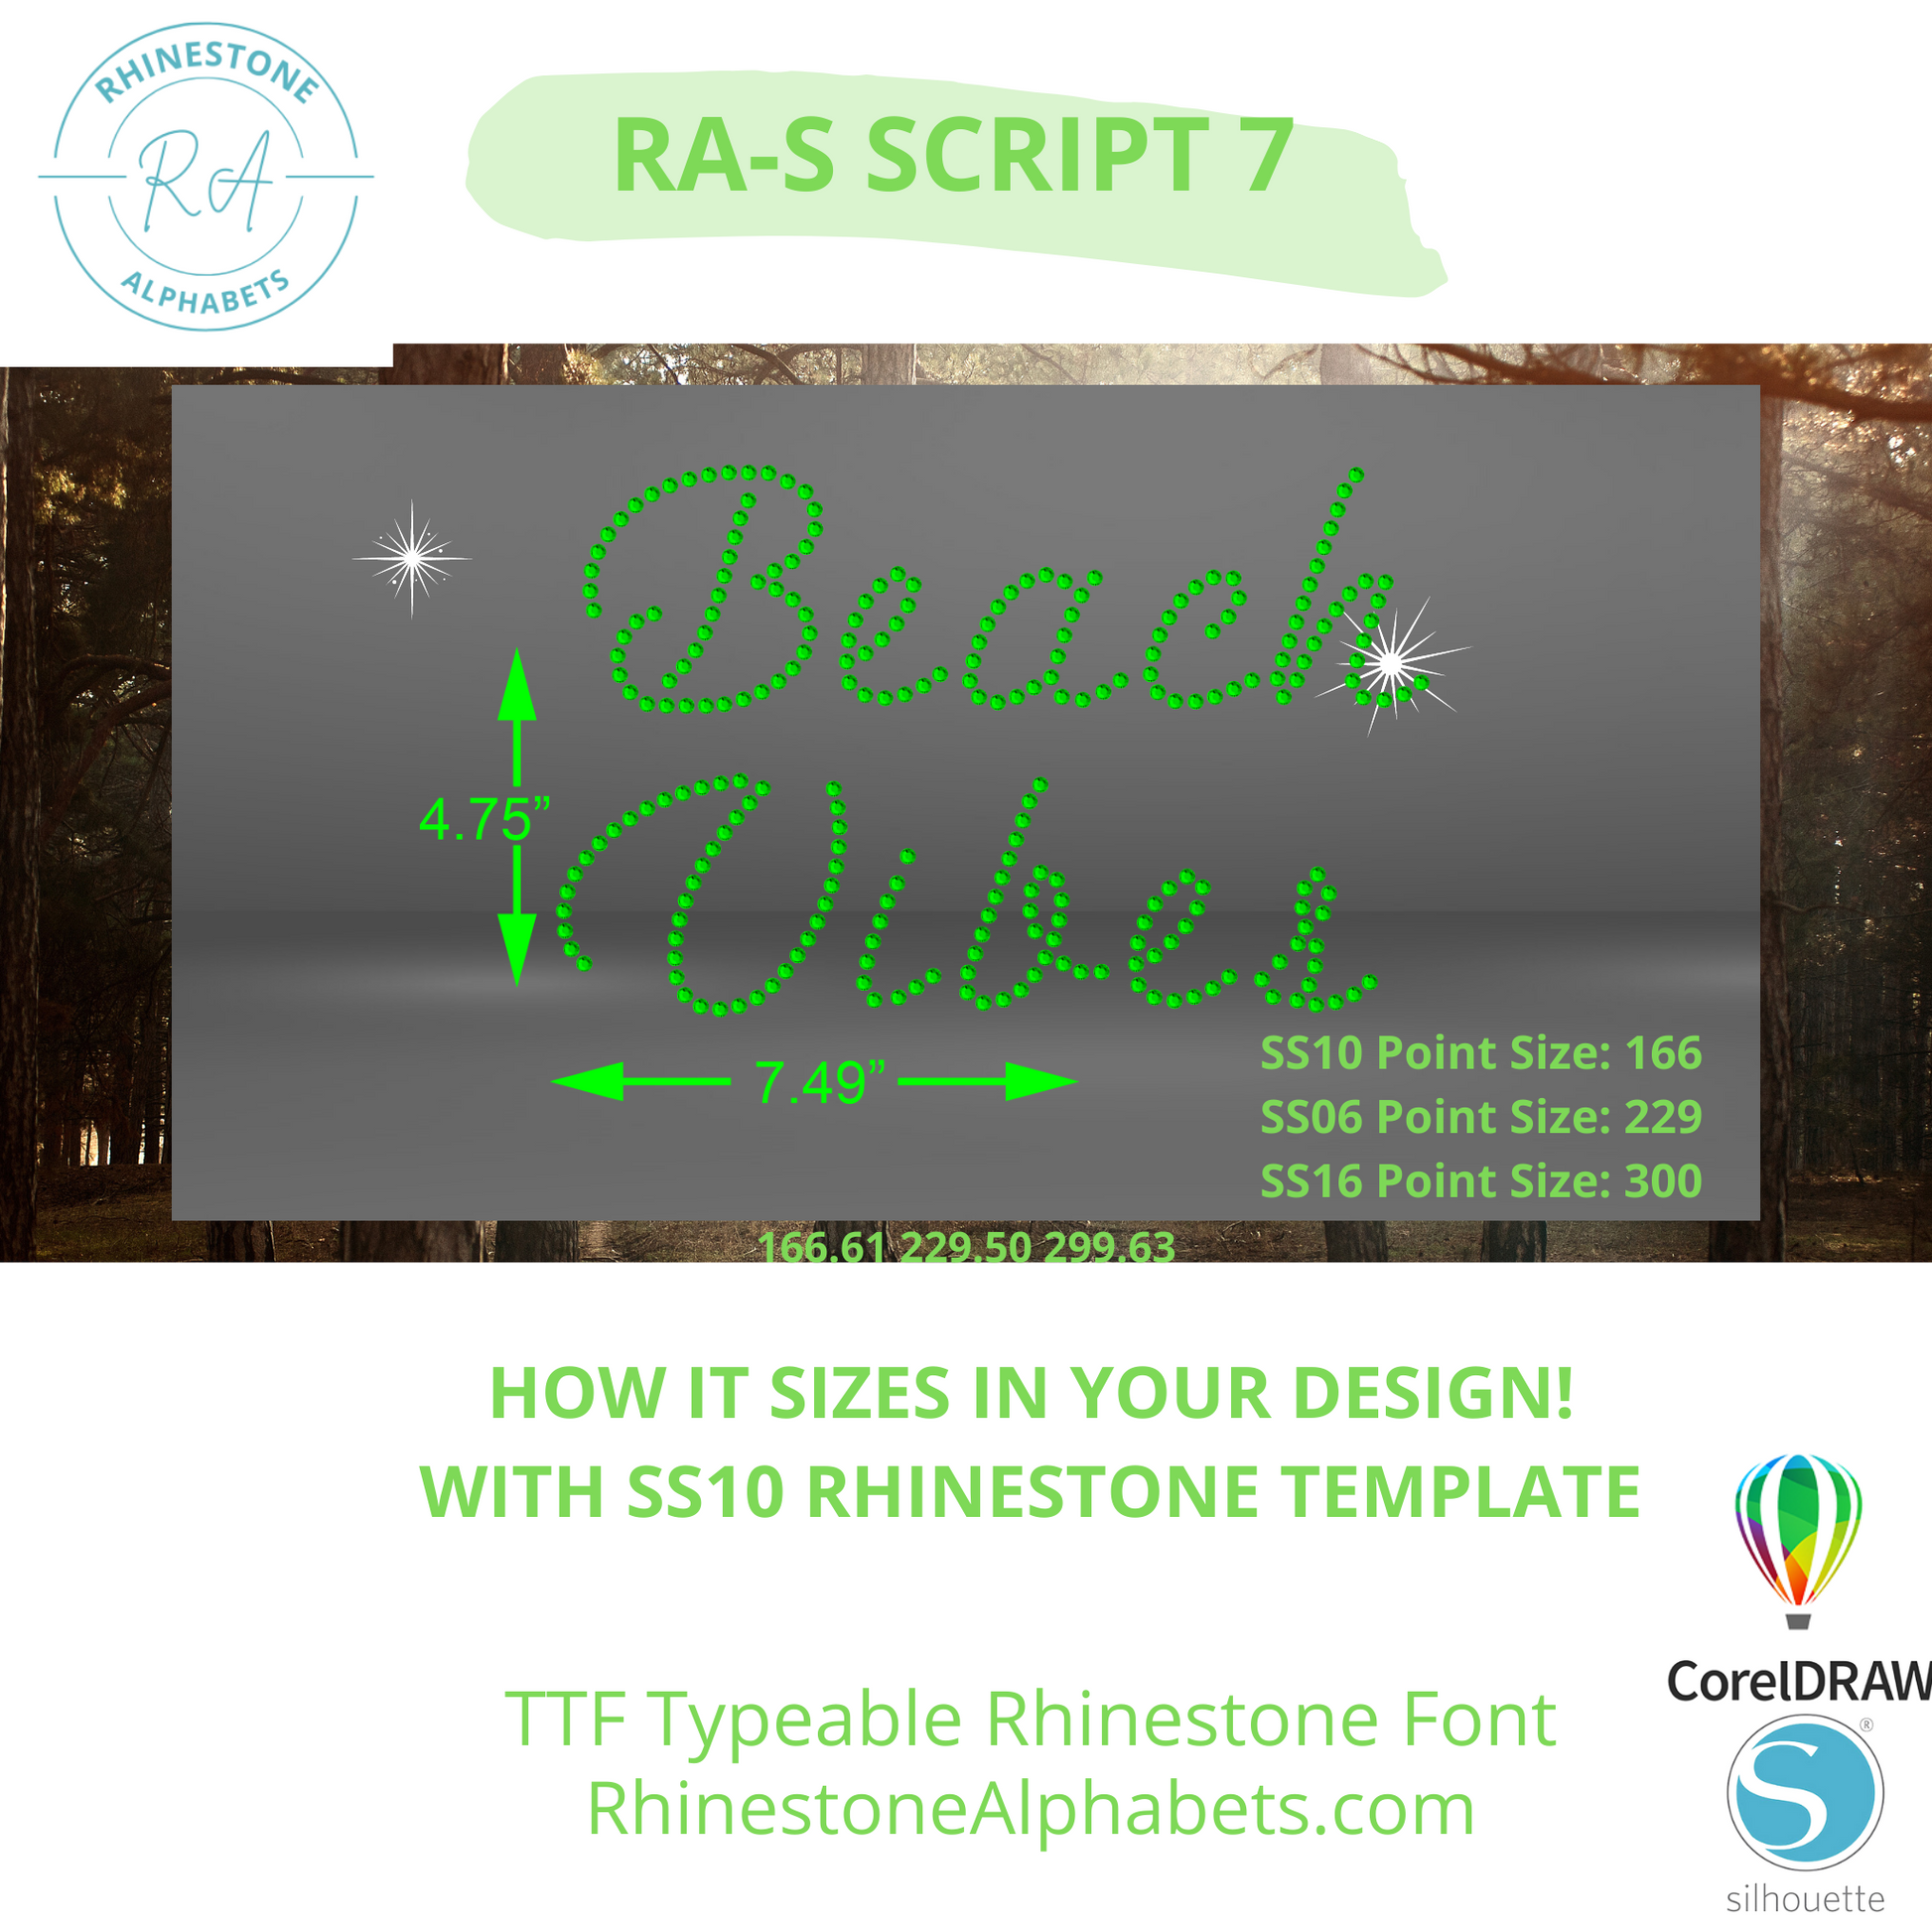 RA-S Script 7 - RhinestoneAlphabets